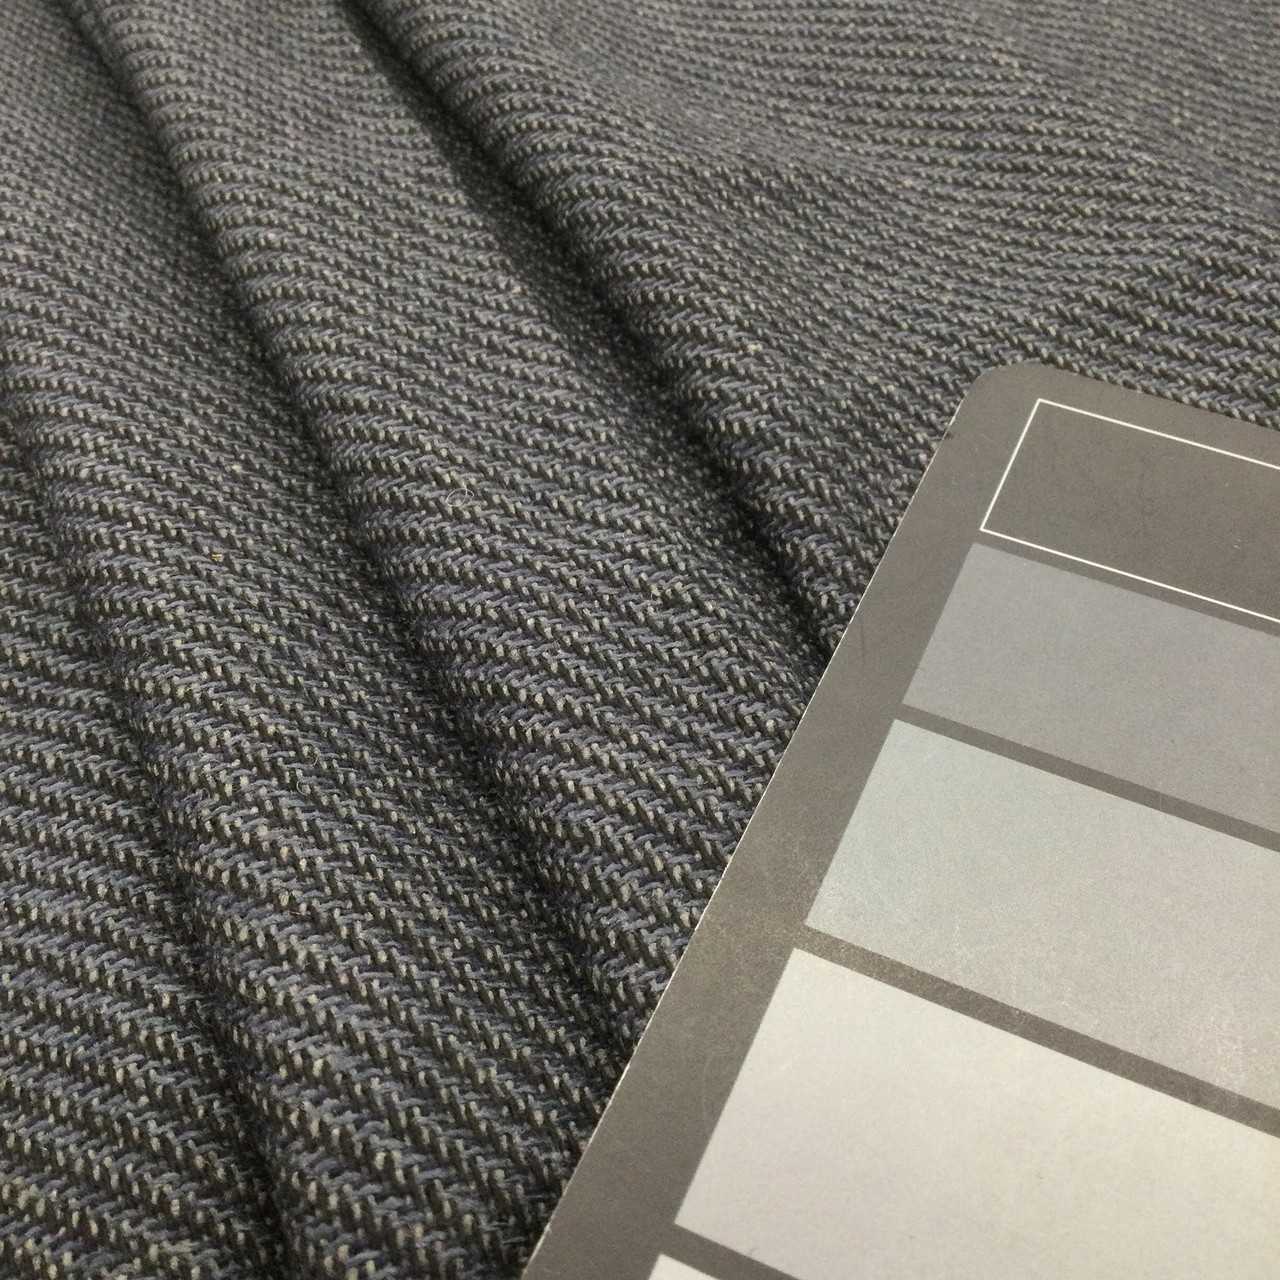 97% Organic Merino Wool/3% Spandex Interlock Blend Fabric - Feltable